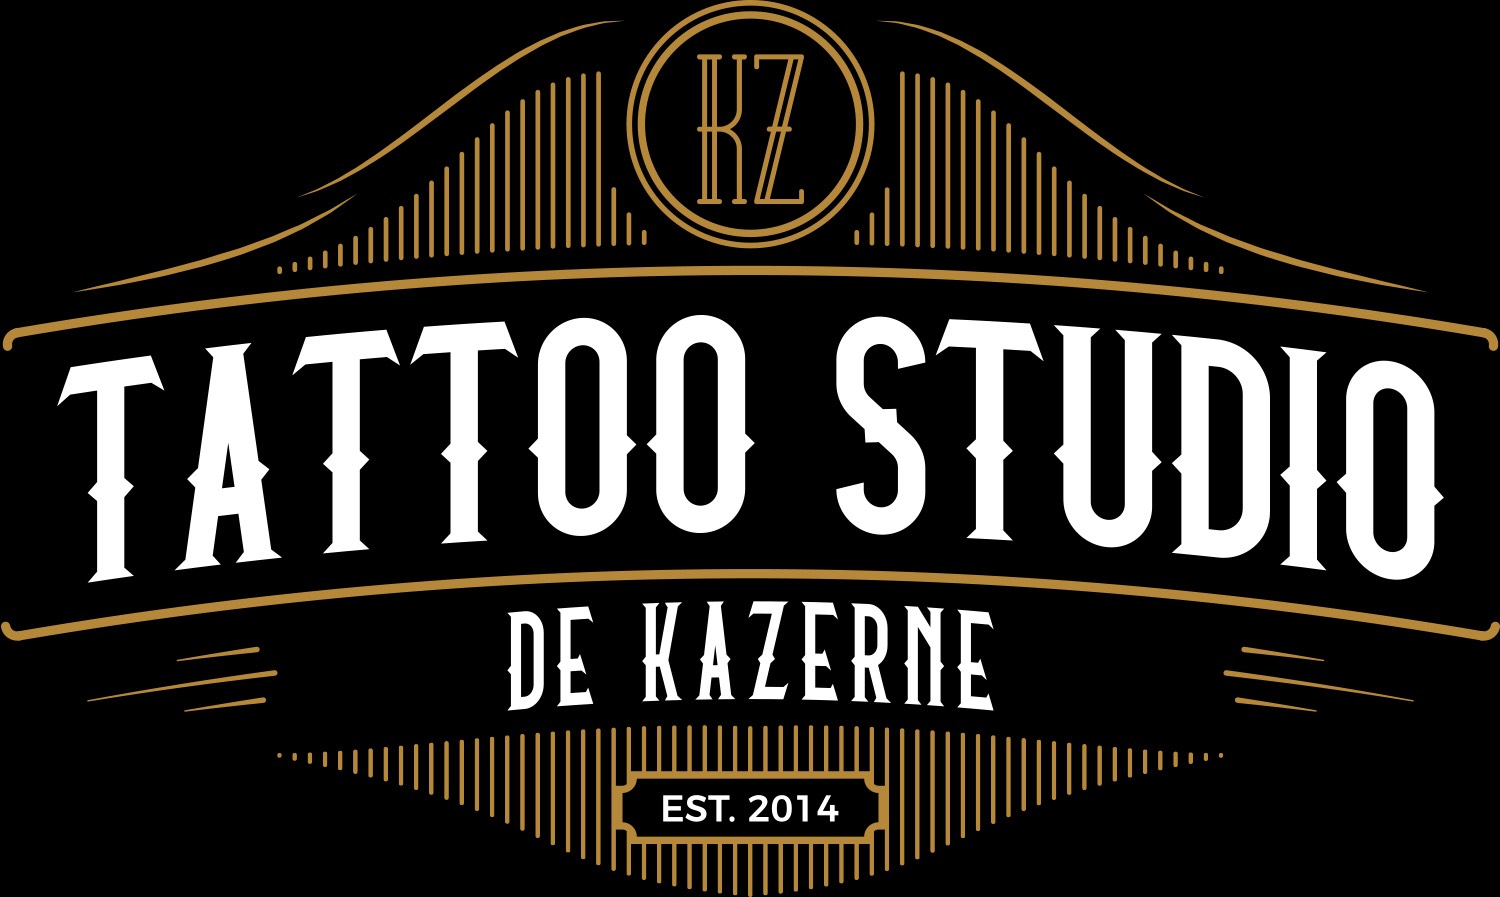 Tattoo Studio De Kazerne